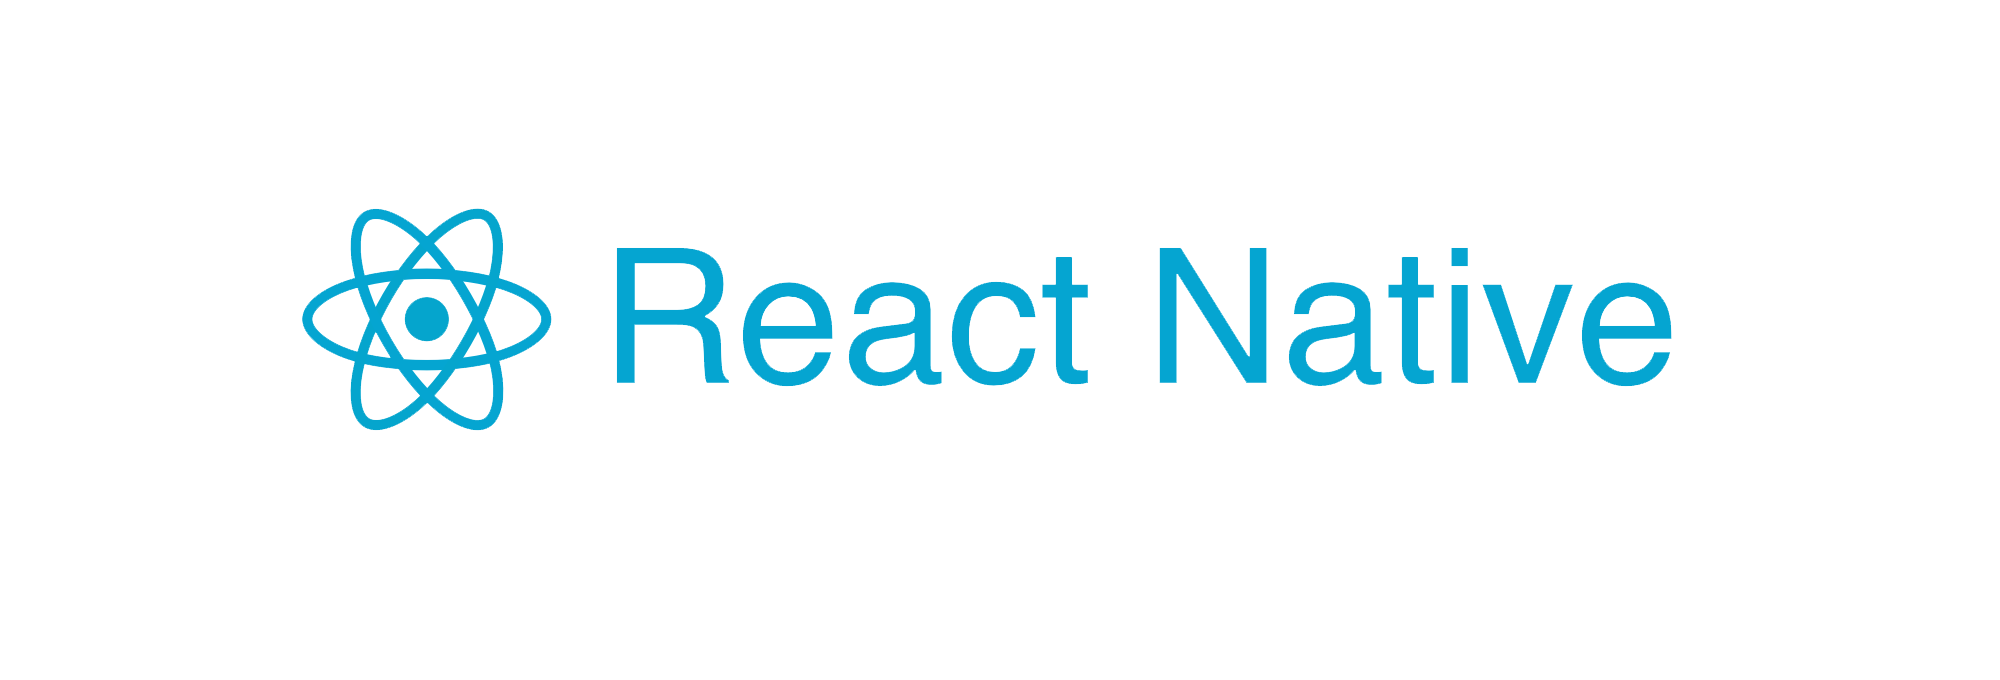 Реакт натив. React native. React native лого. 3. React native. Реакт Натив логотип.